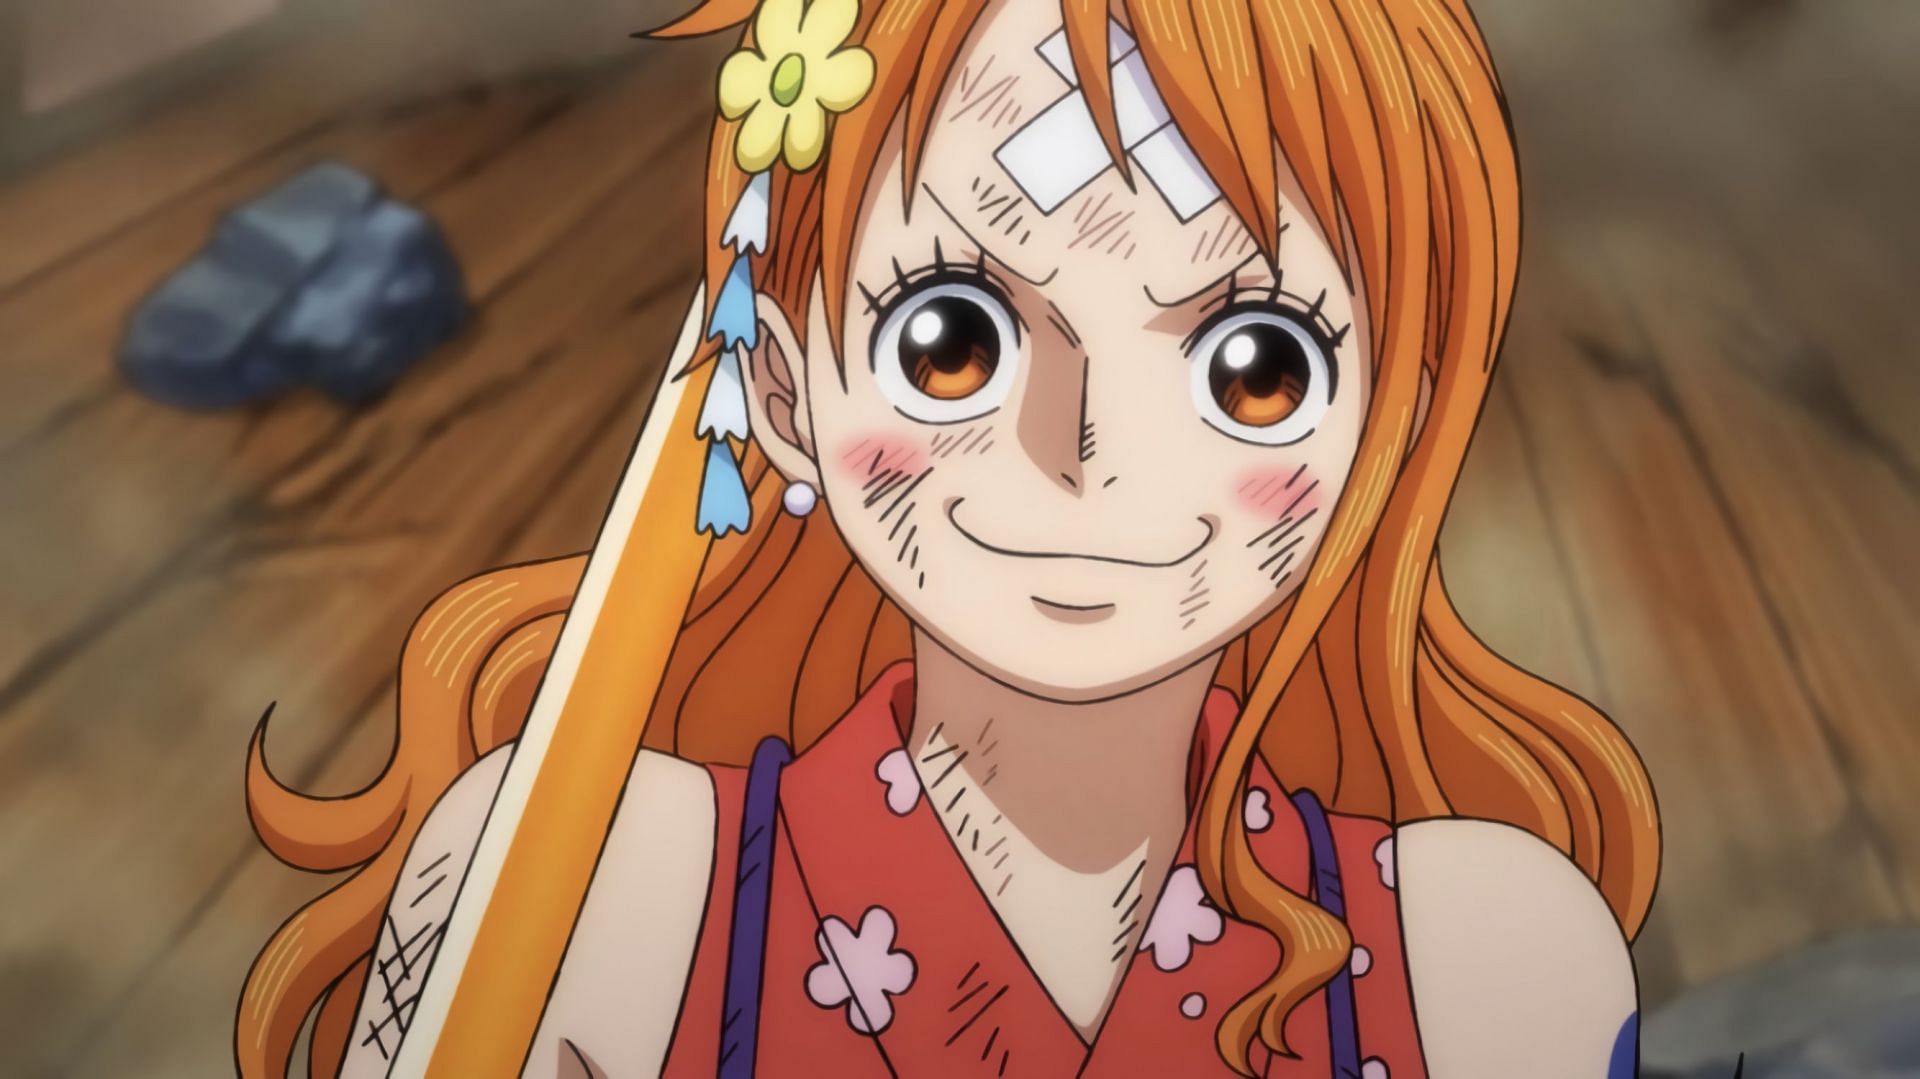 Nami Bekam Endlich Ein Powerup In One Piece Folge 1038 (Bild Via Toei Animation)